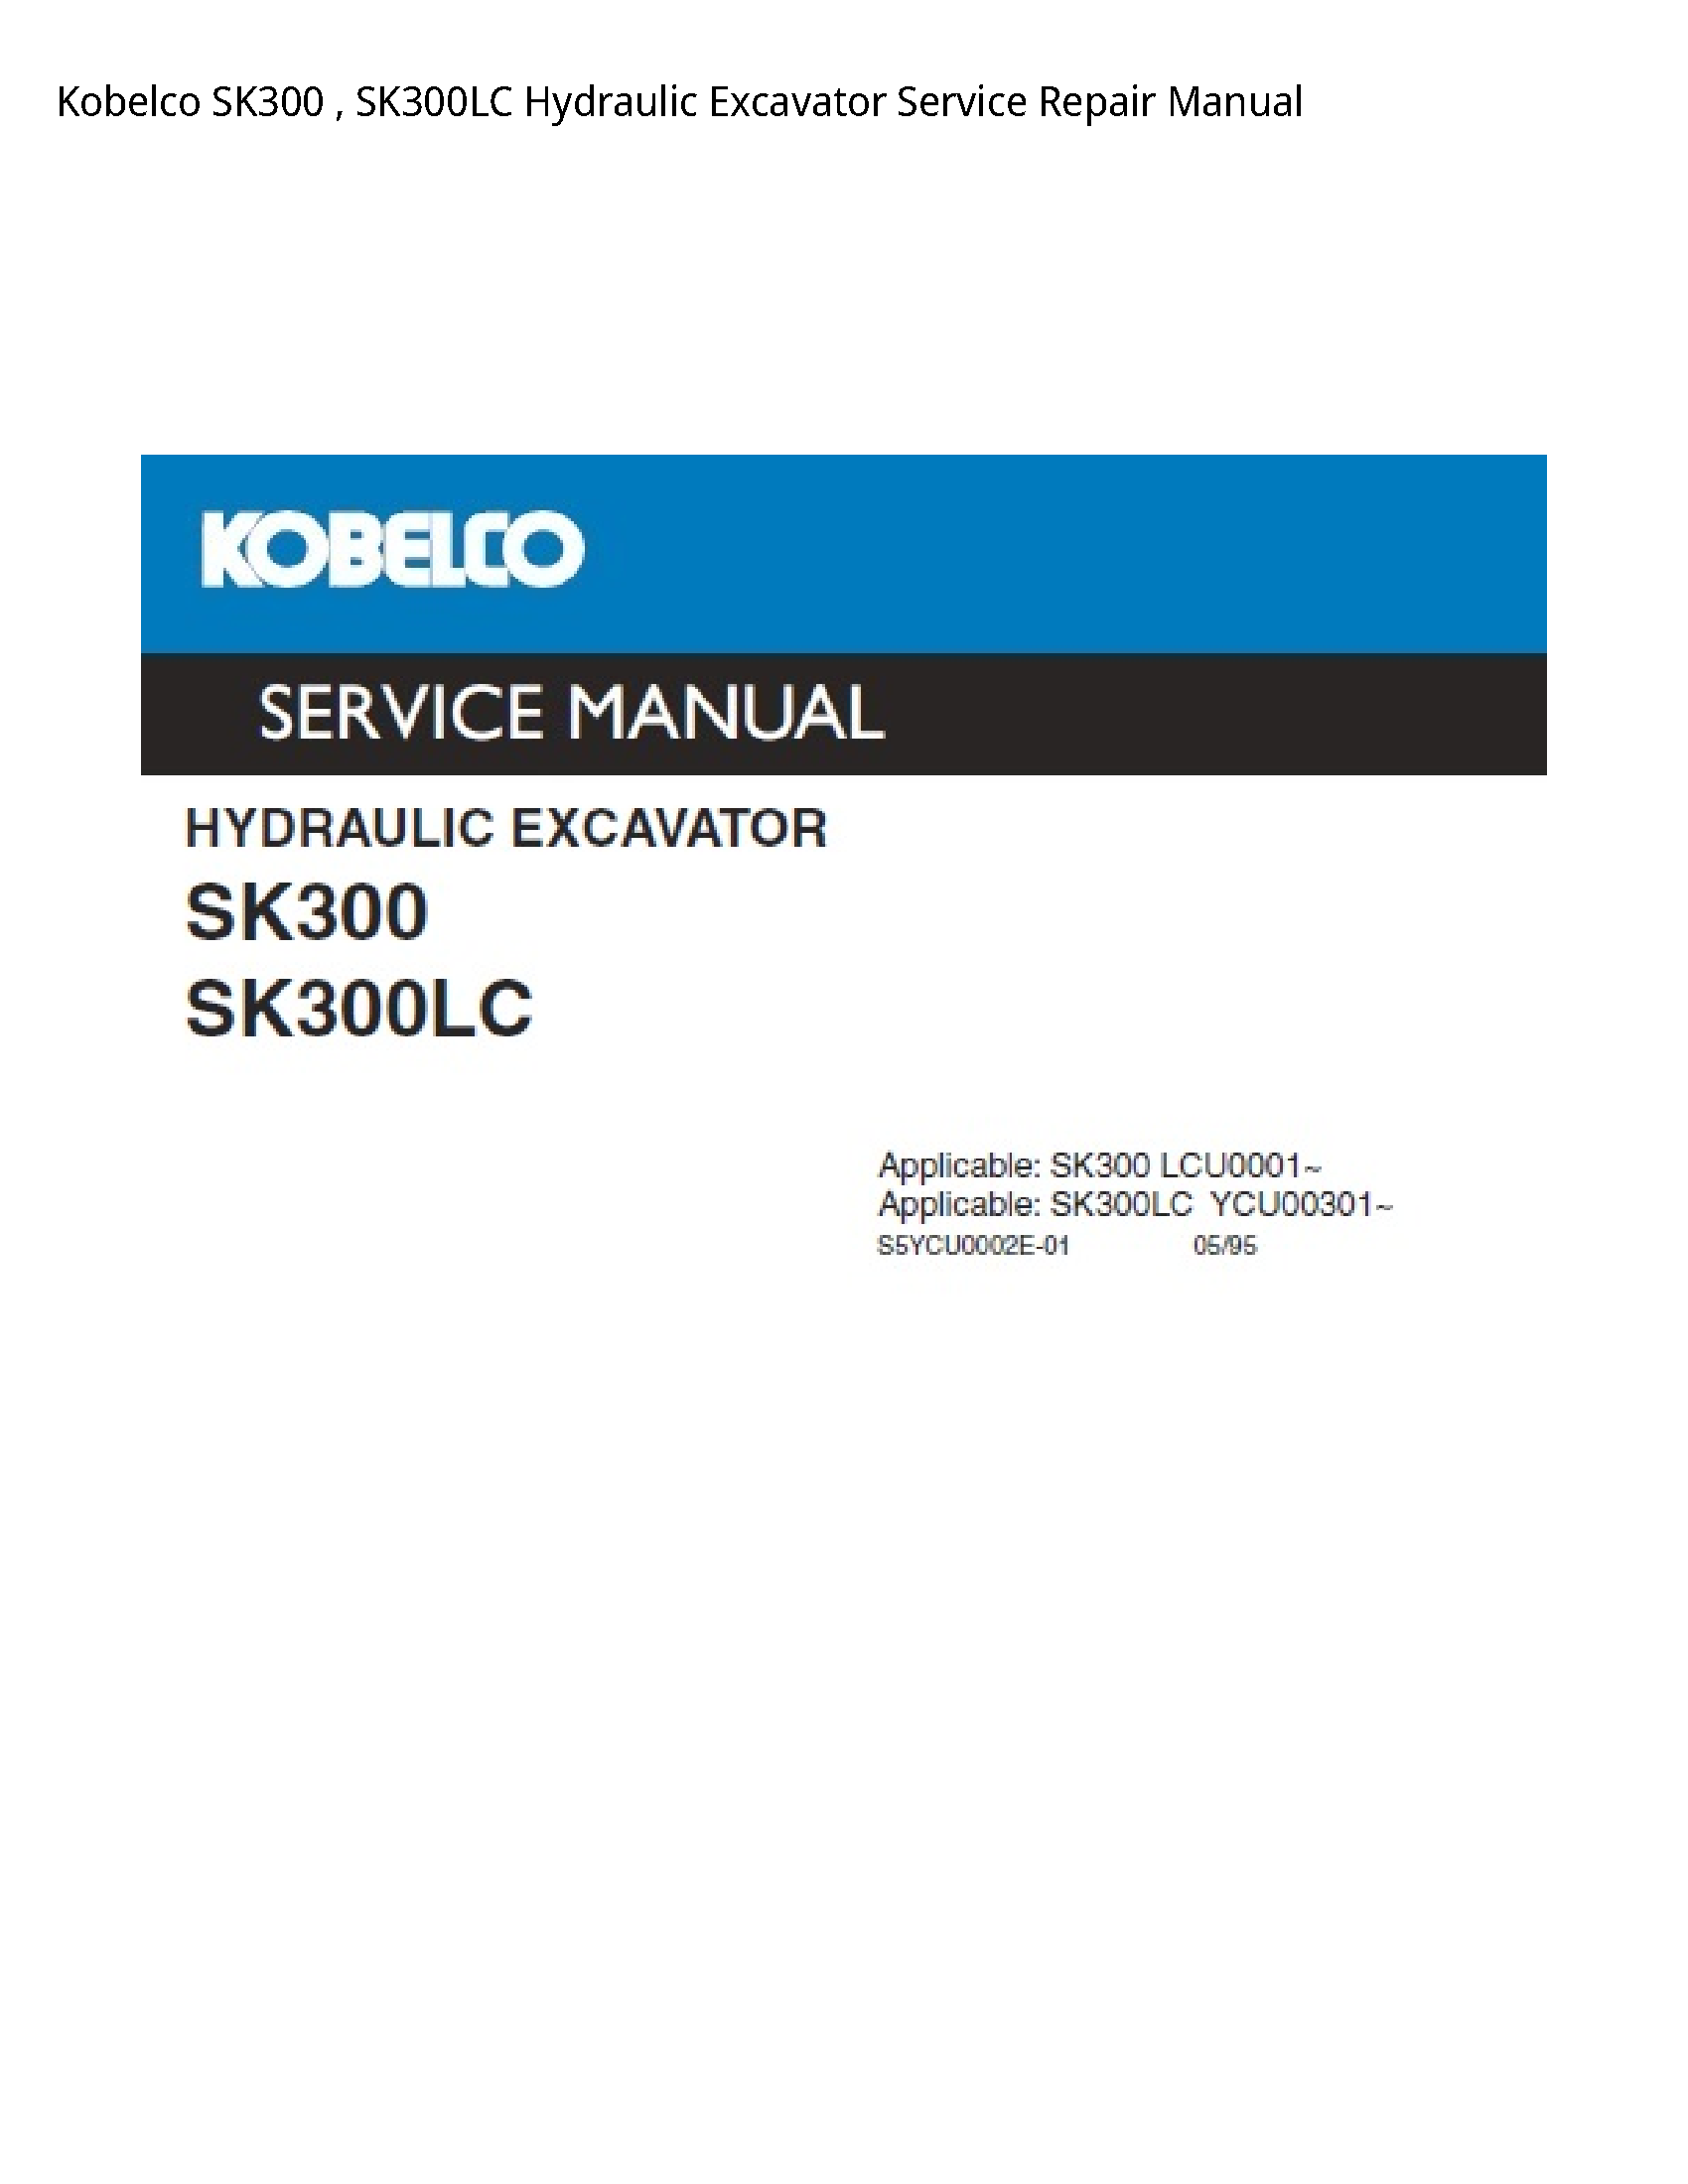 Kobelco SK300 Hydraulic Excavator manual